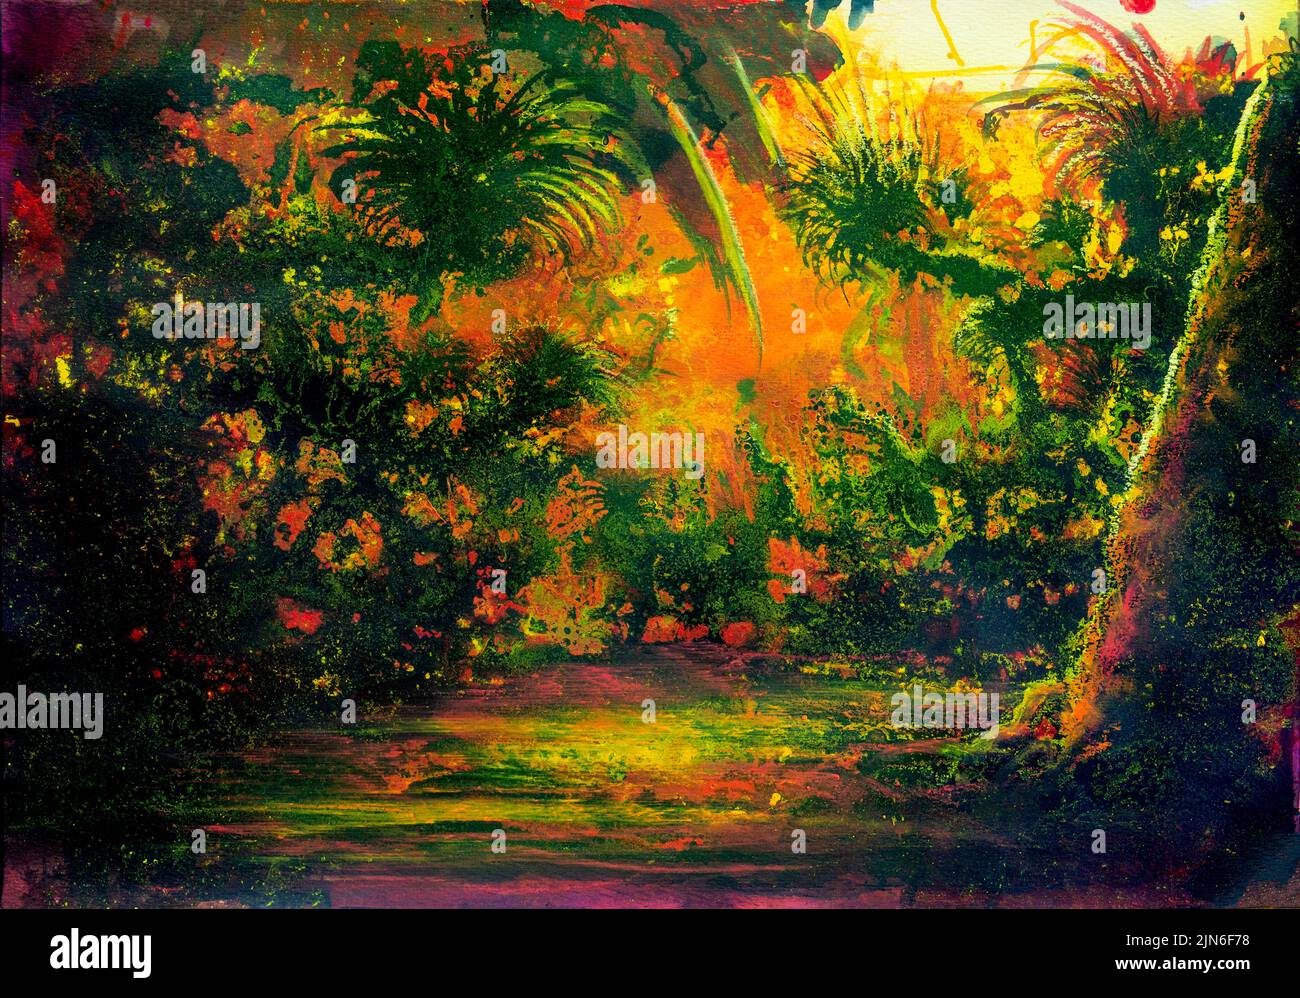 Vivid illuminated colorful jungle vegetation illustration at evening time Stock Photo